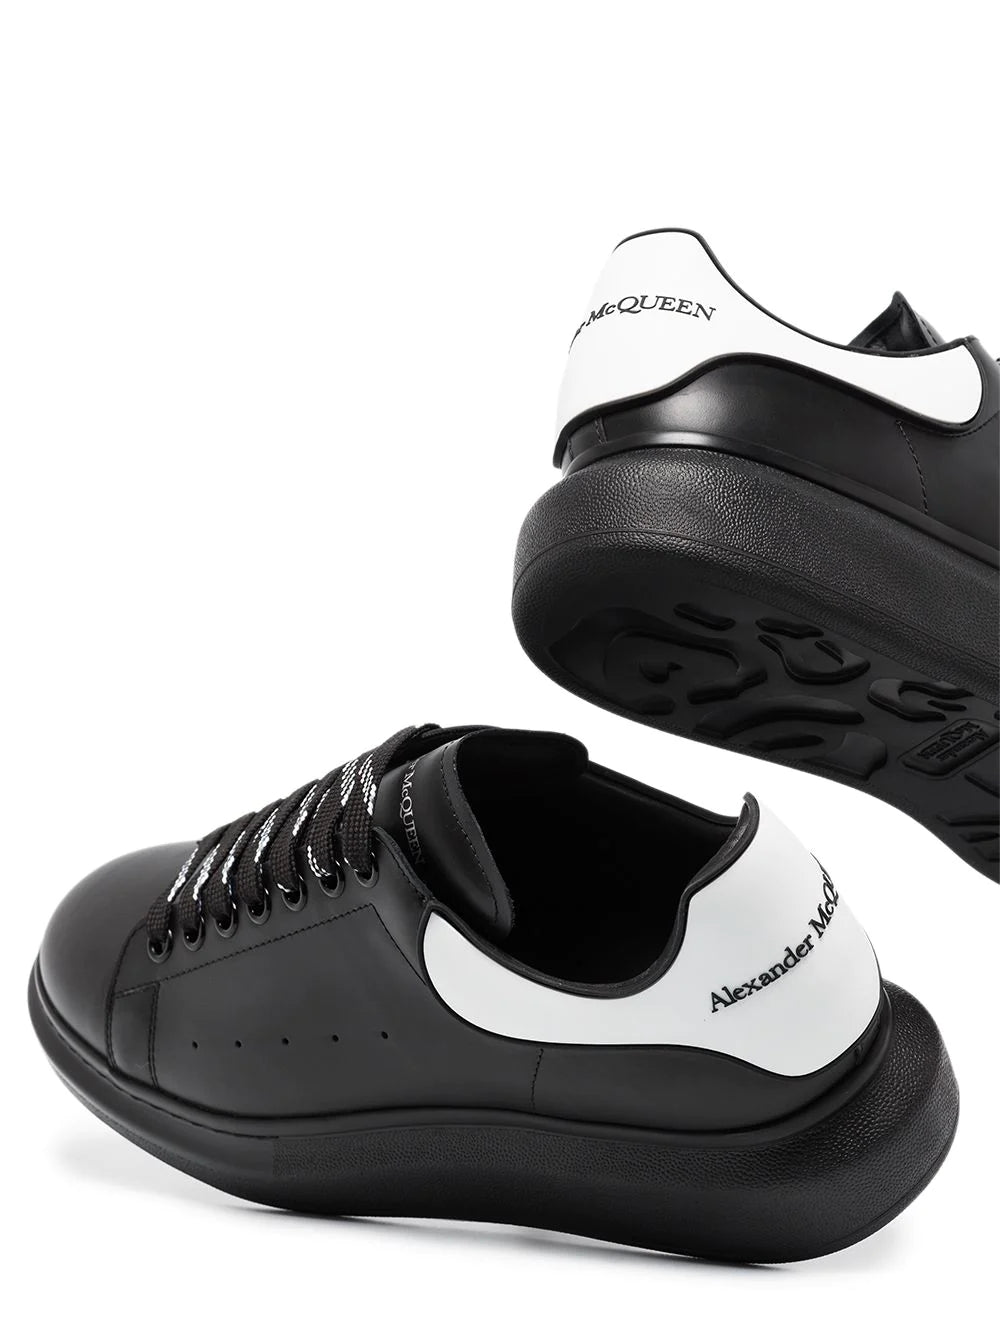 Alexander McQueen Oversized Sneakers Black/White